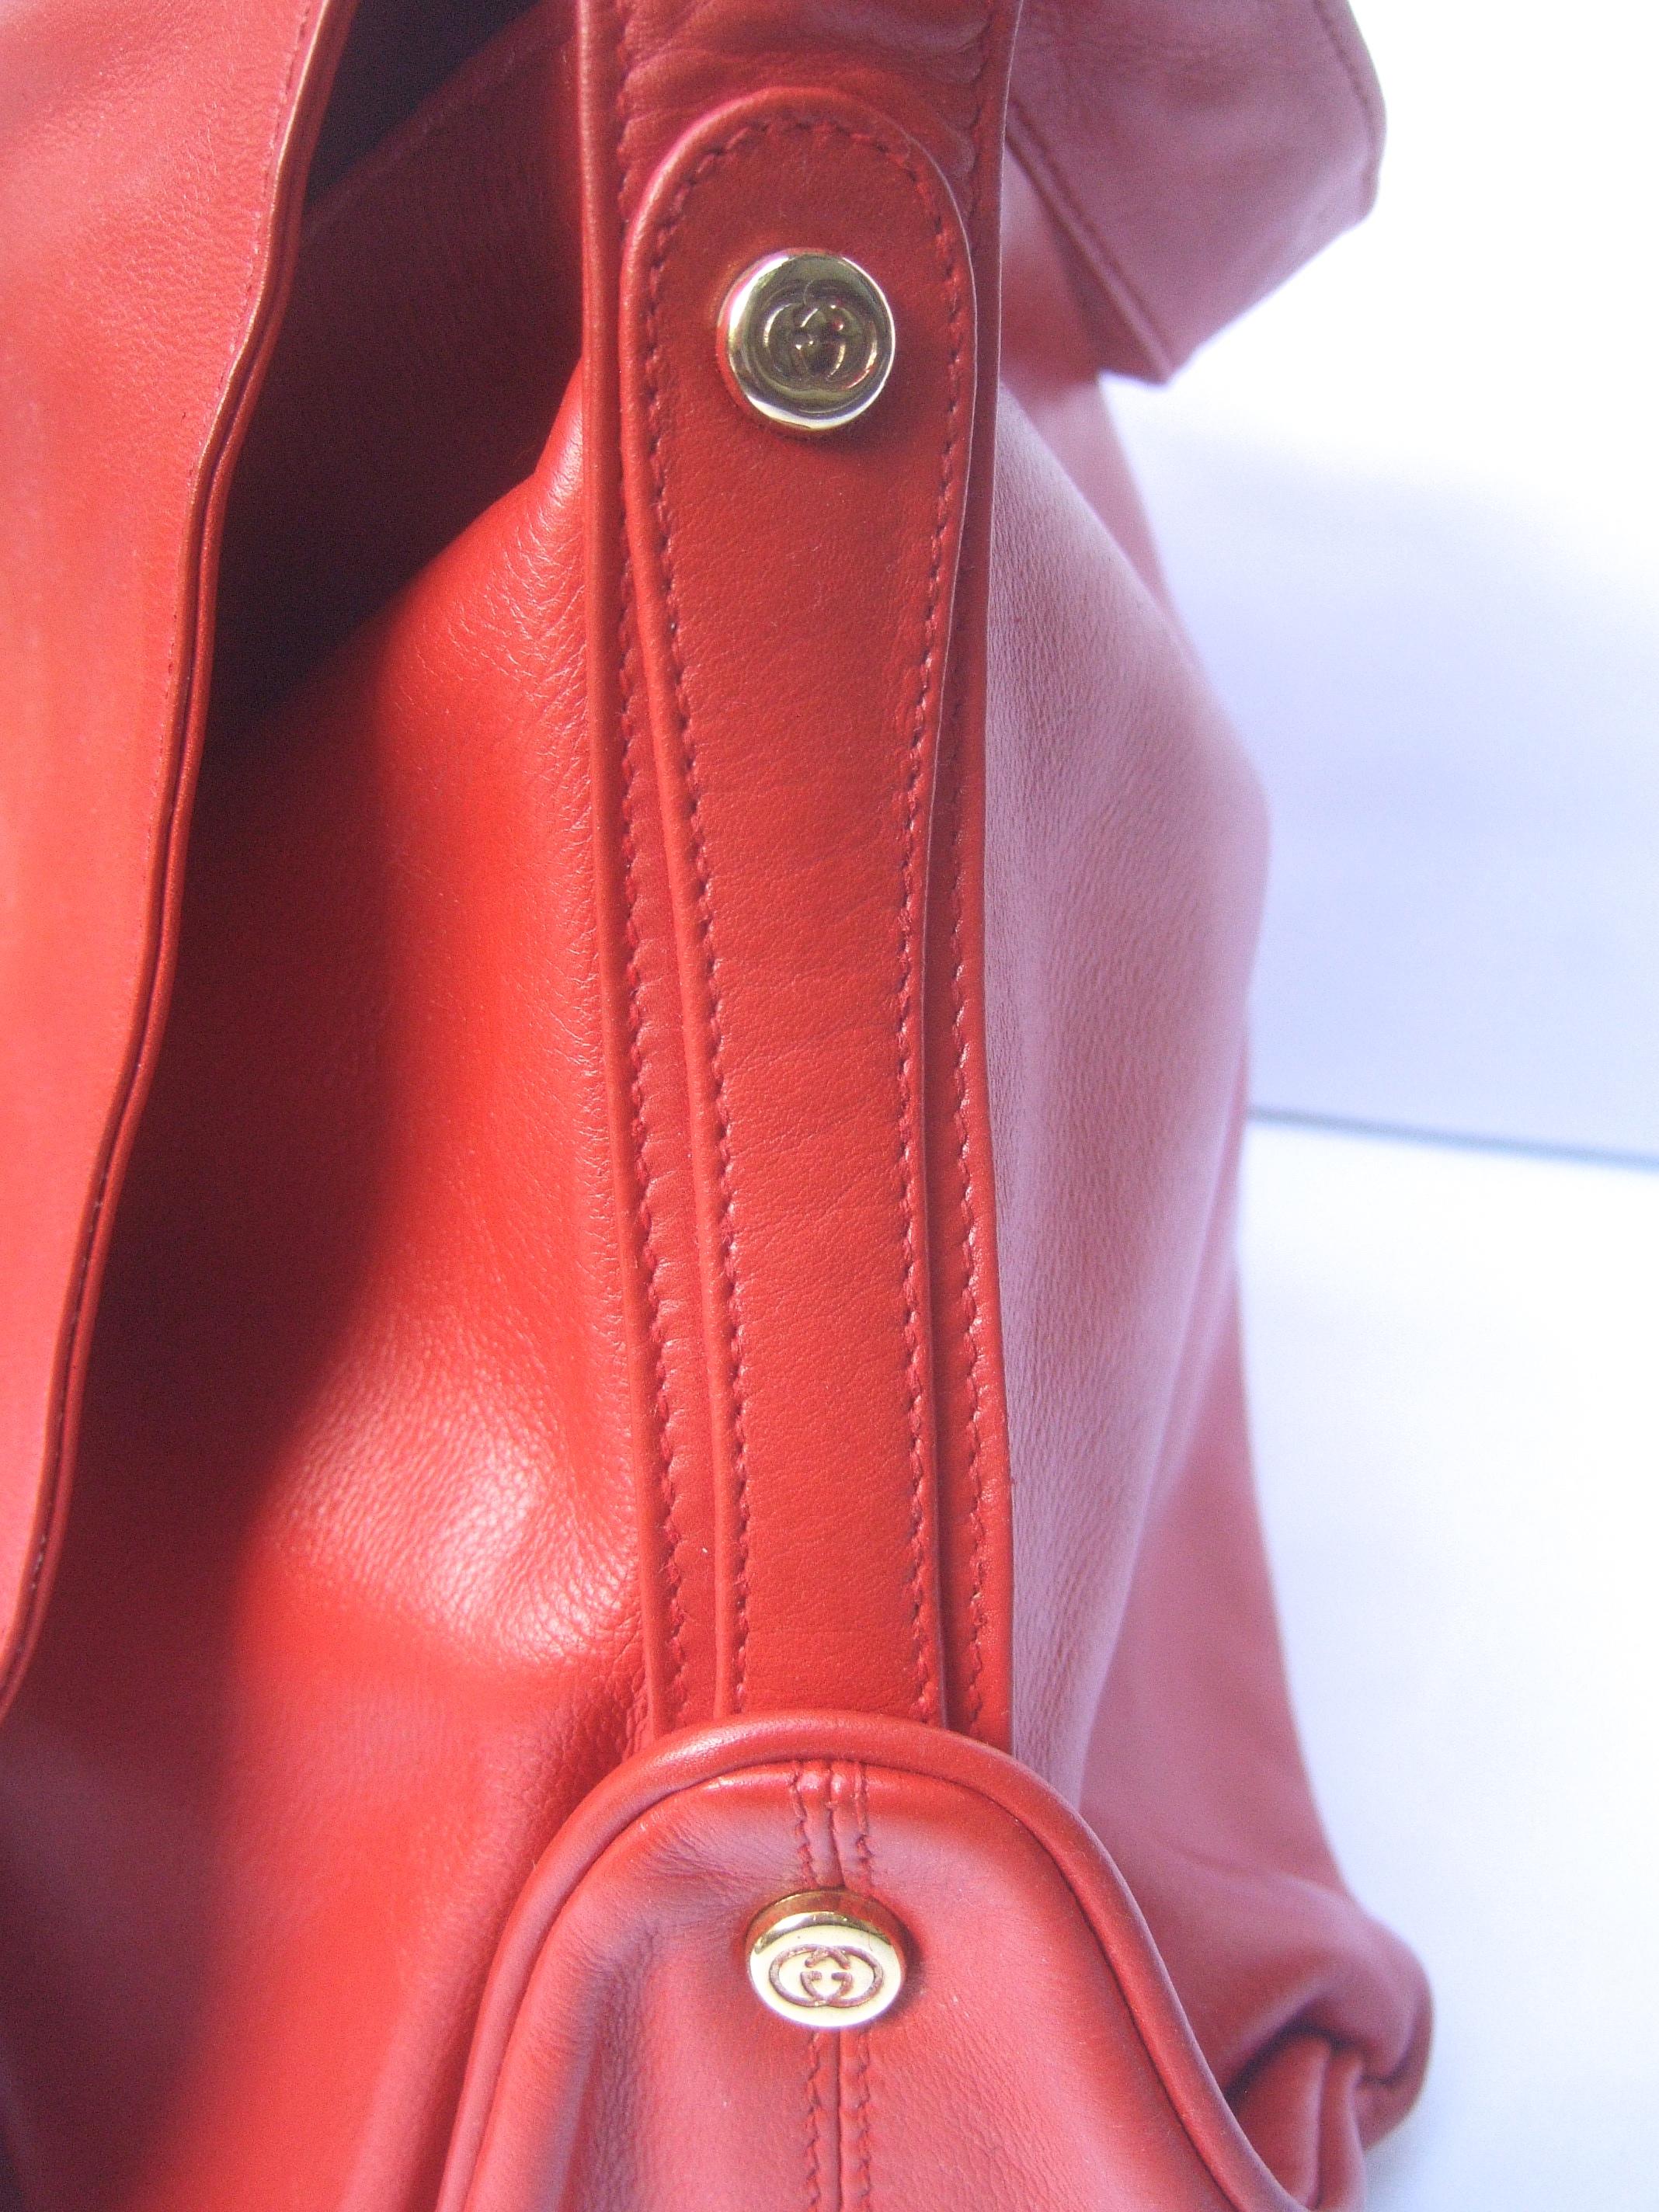 Gucci Italy Rare Red Leather Tiger Emblem Shoulder Bag c 1980s  5